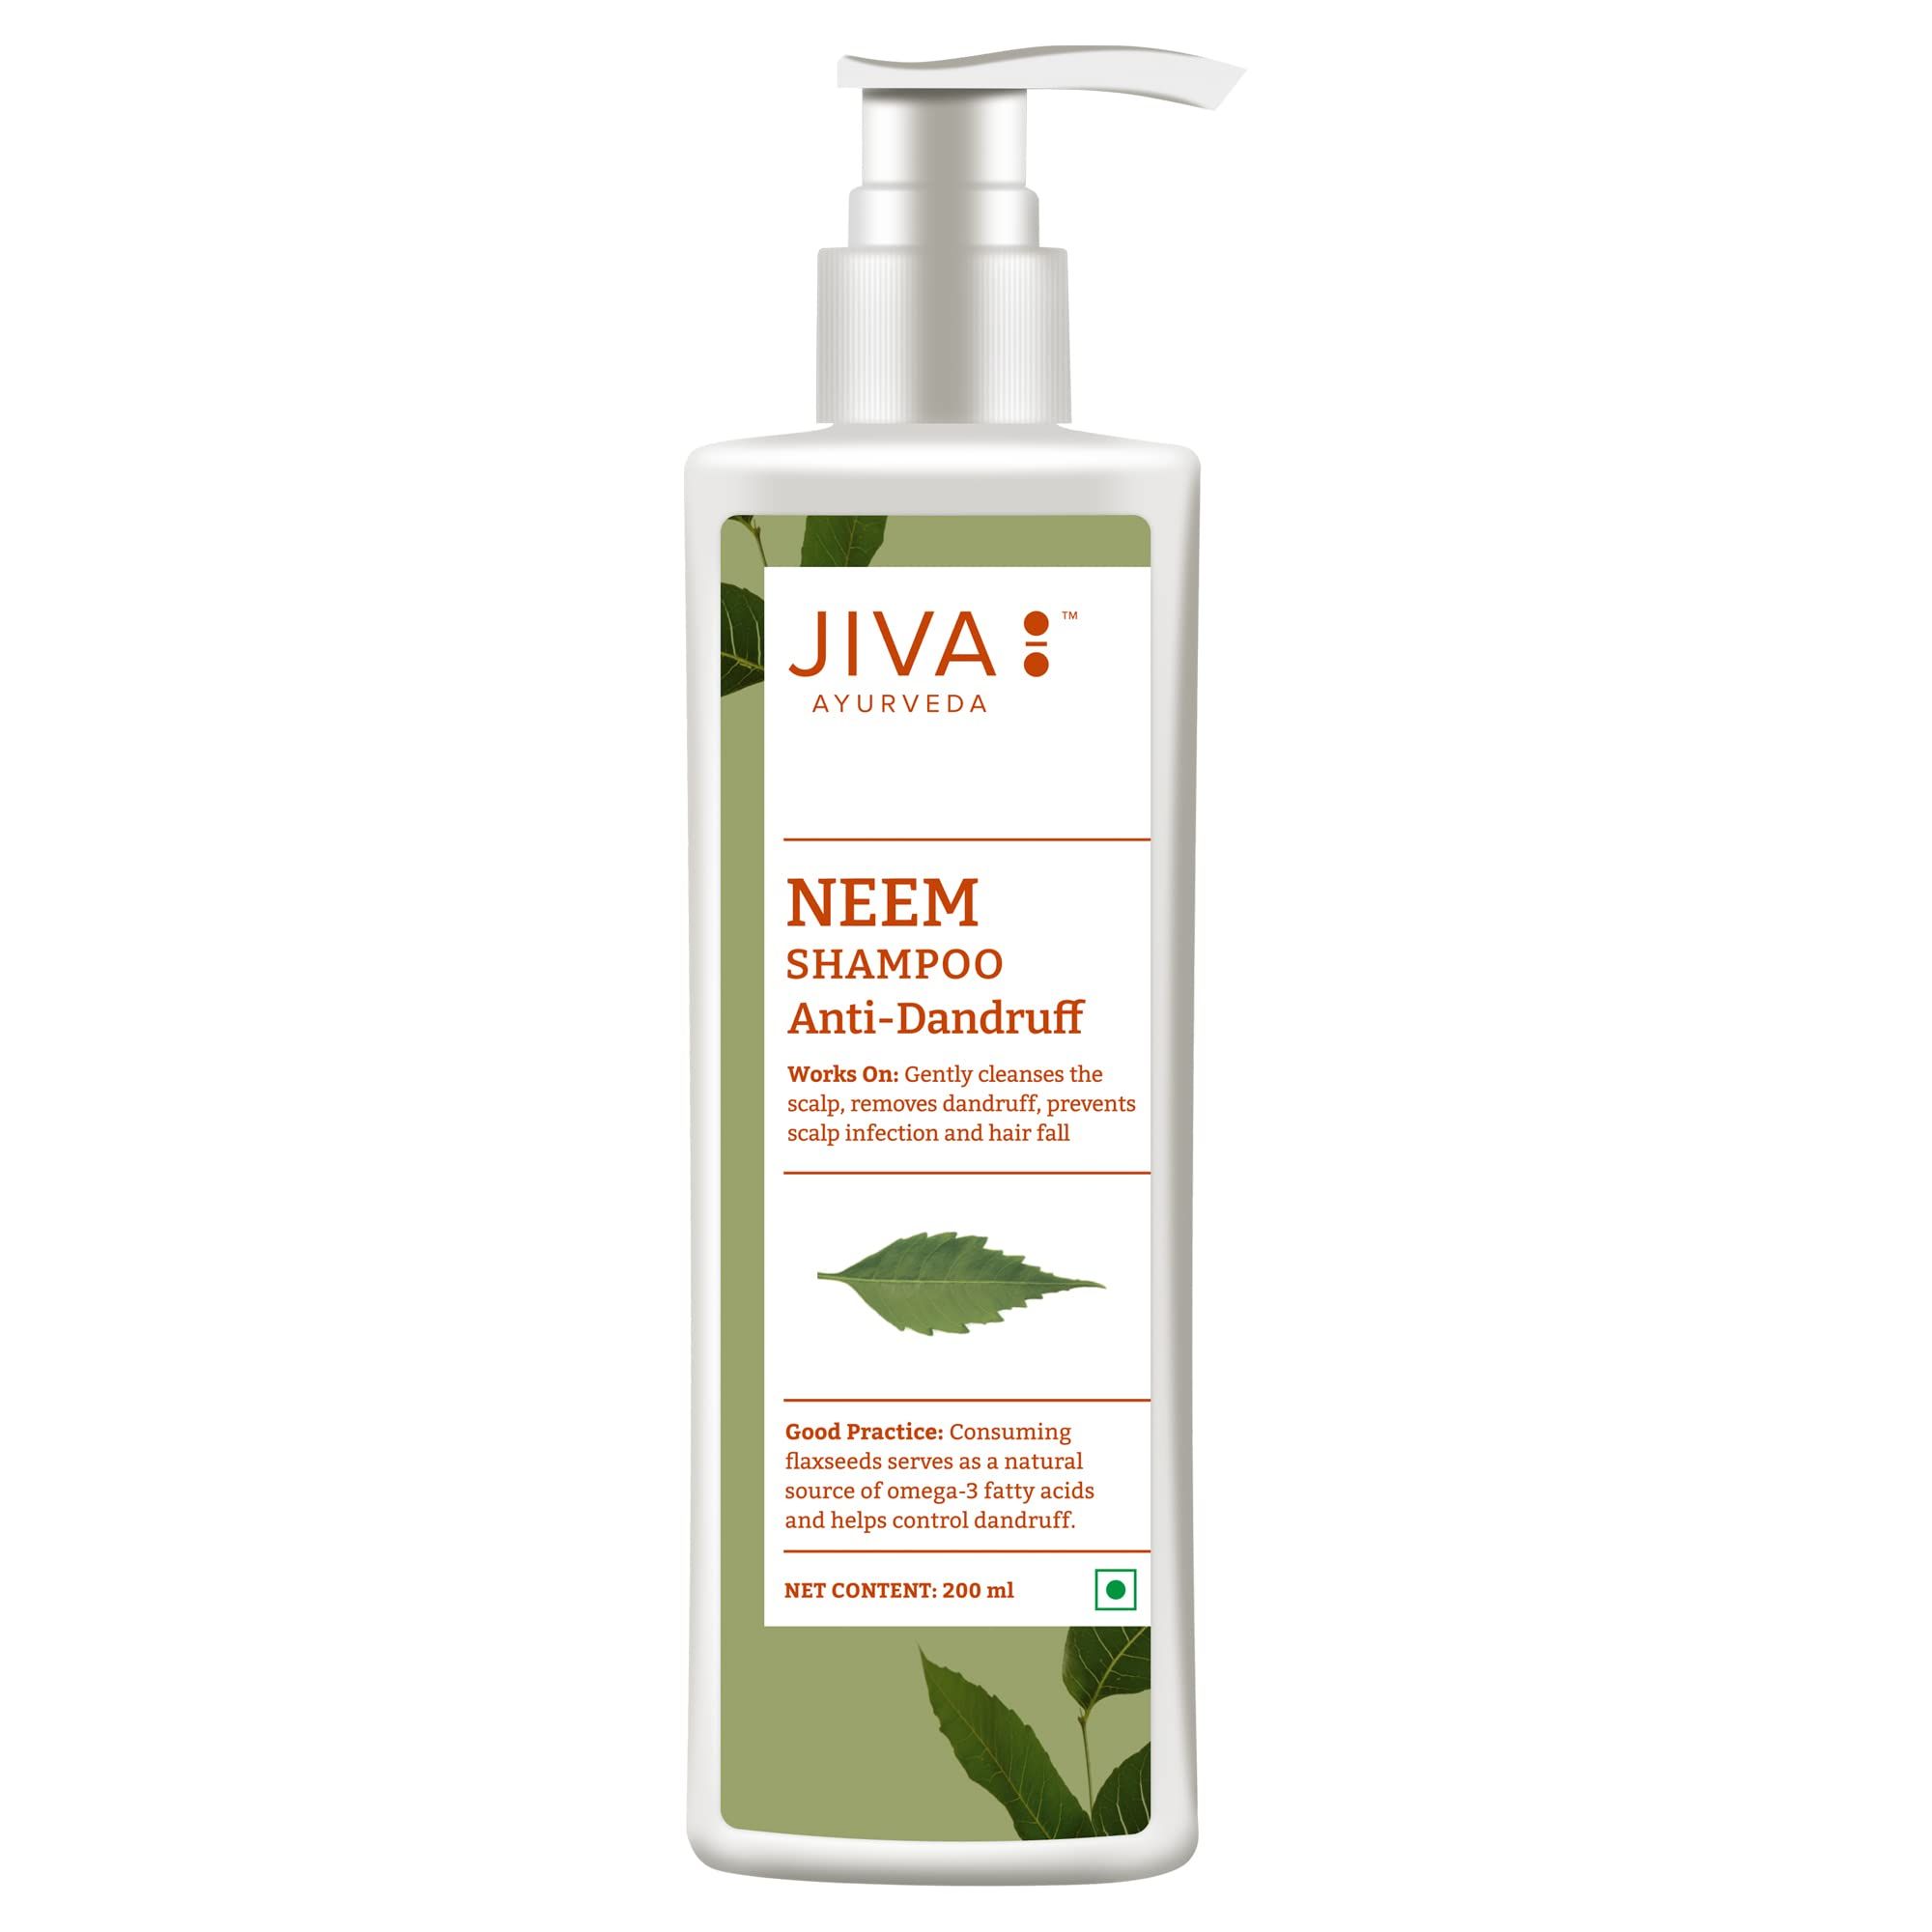 Buy Jiva Ayurveda Neem Shampoo at Best Price Online